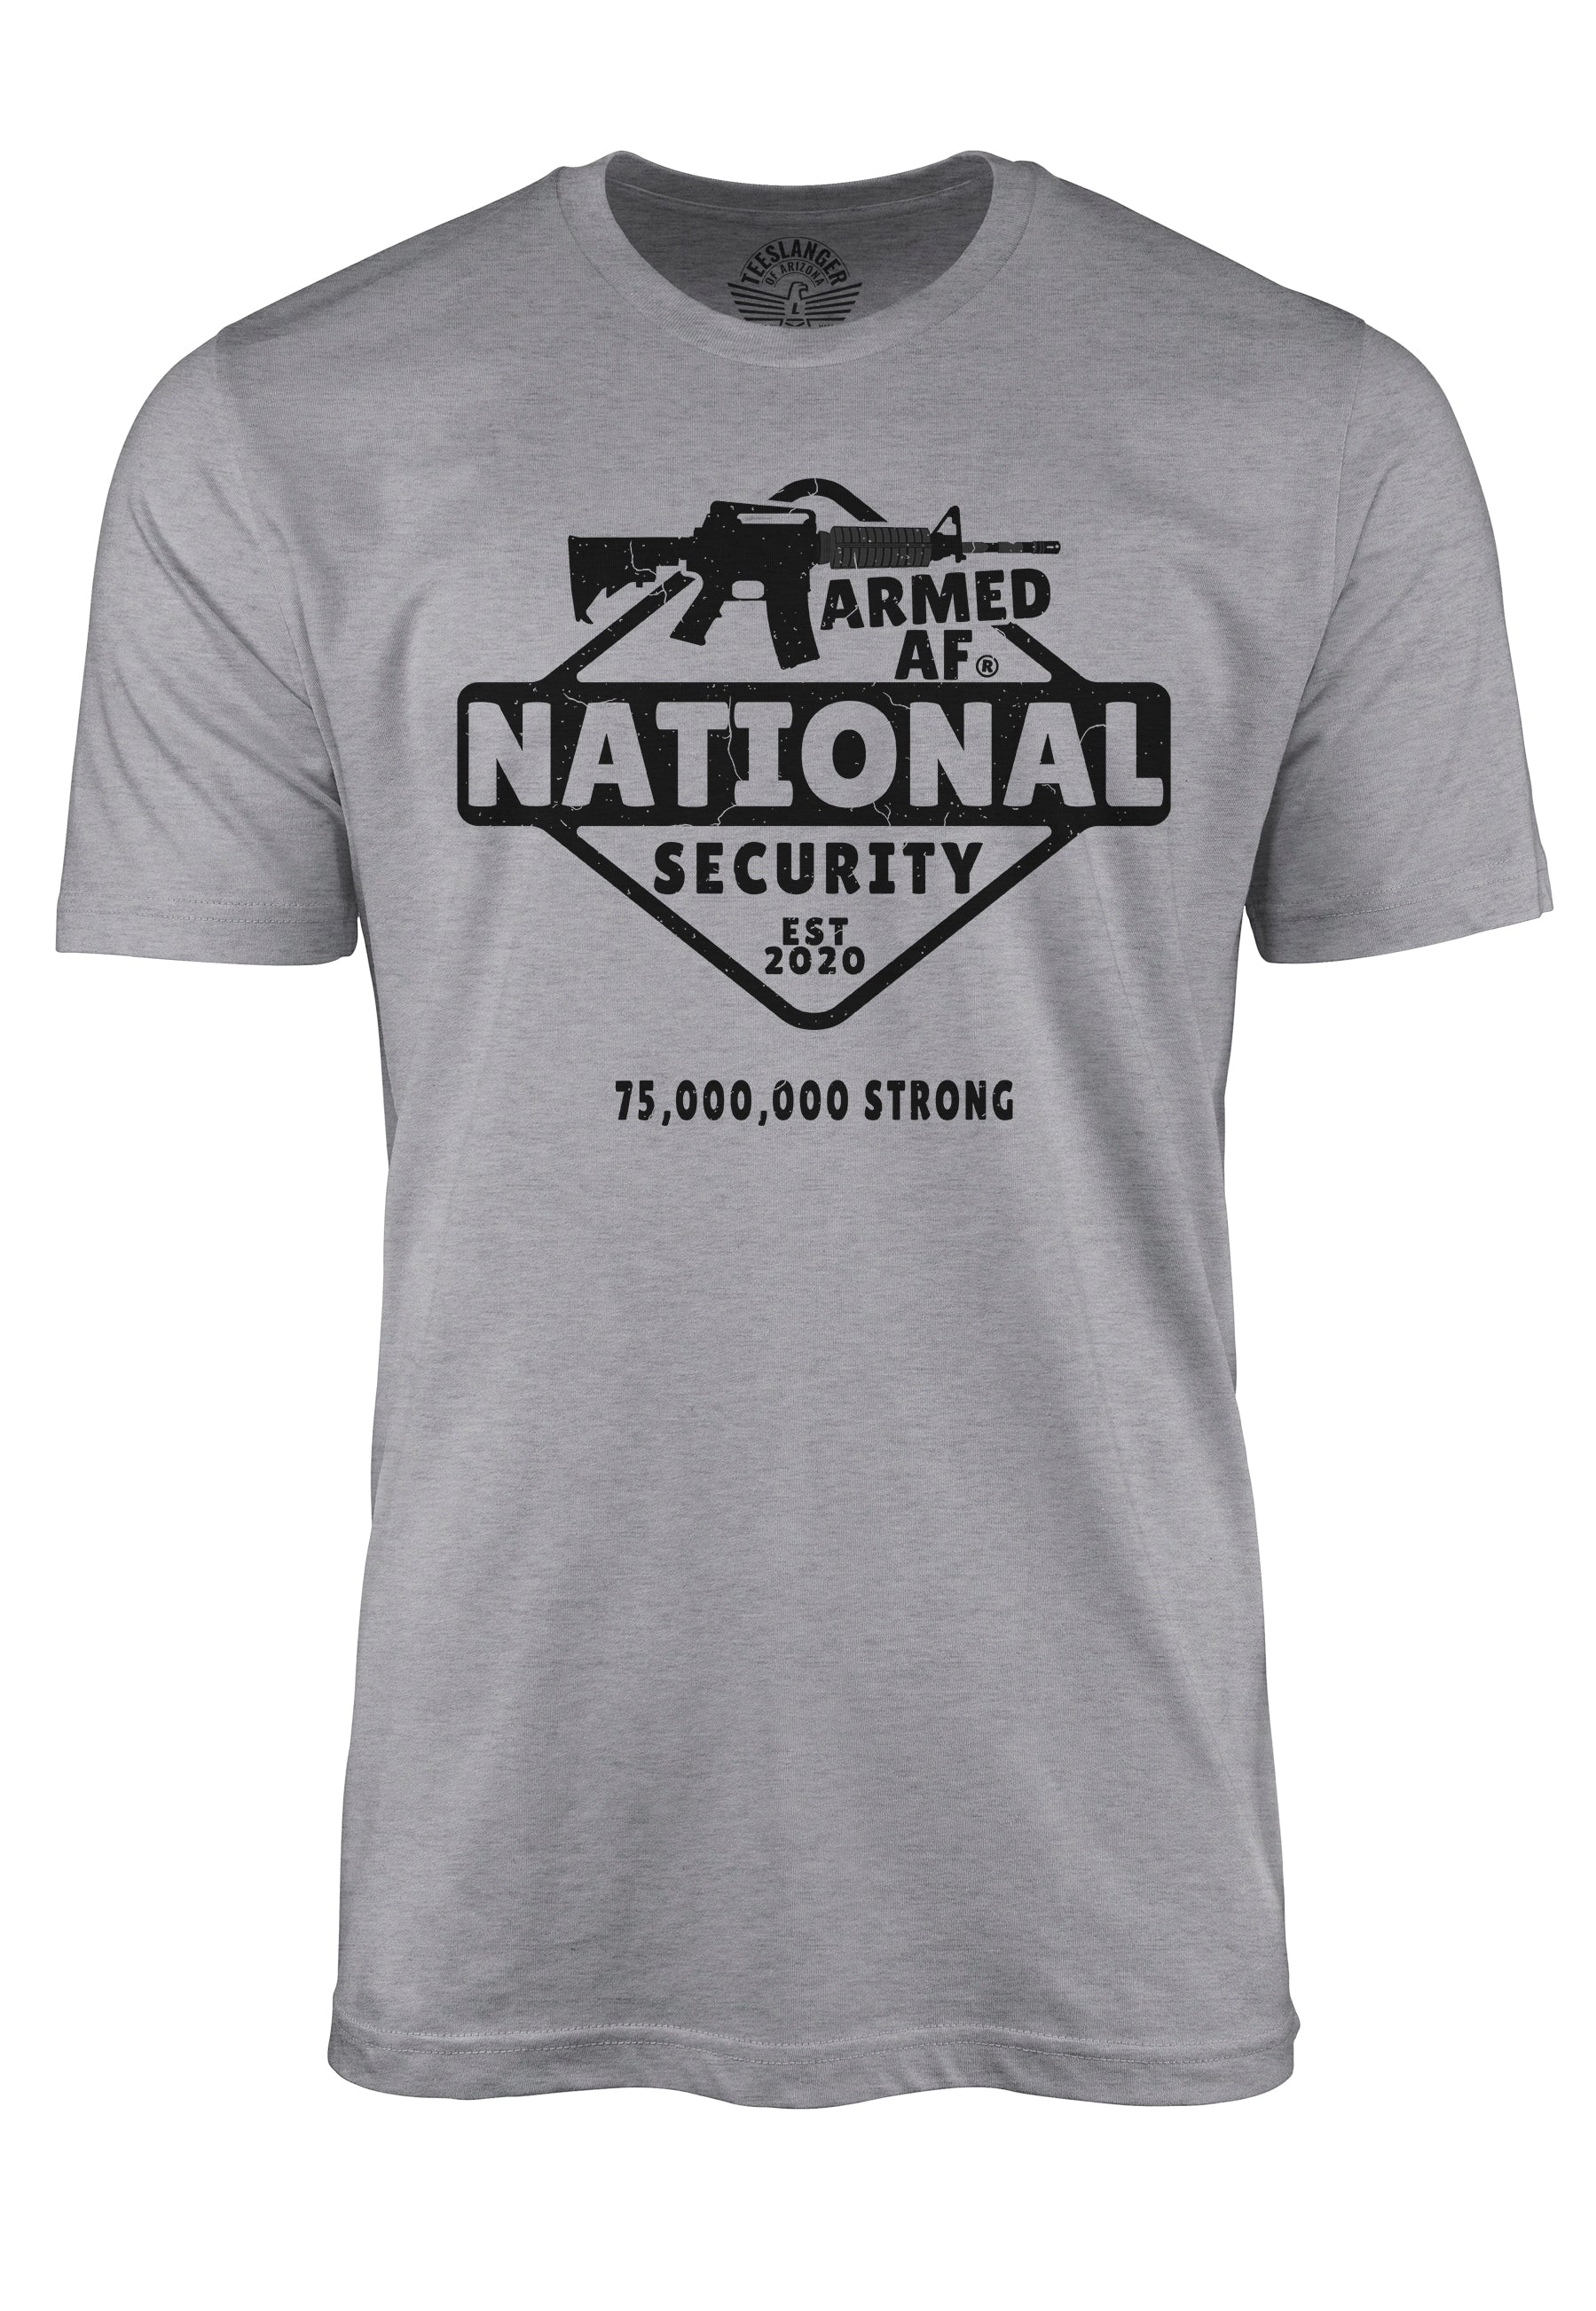 National Security Armed AF tee